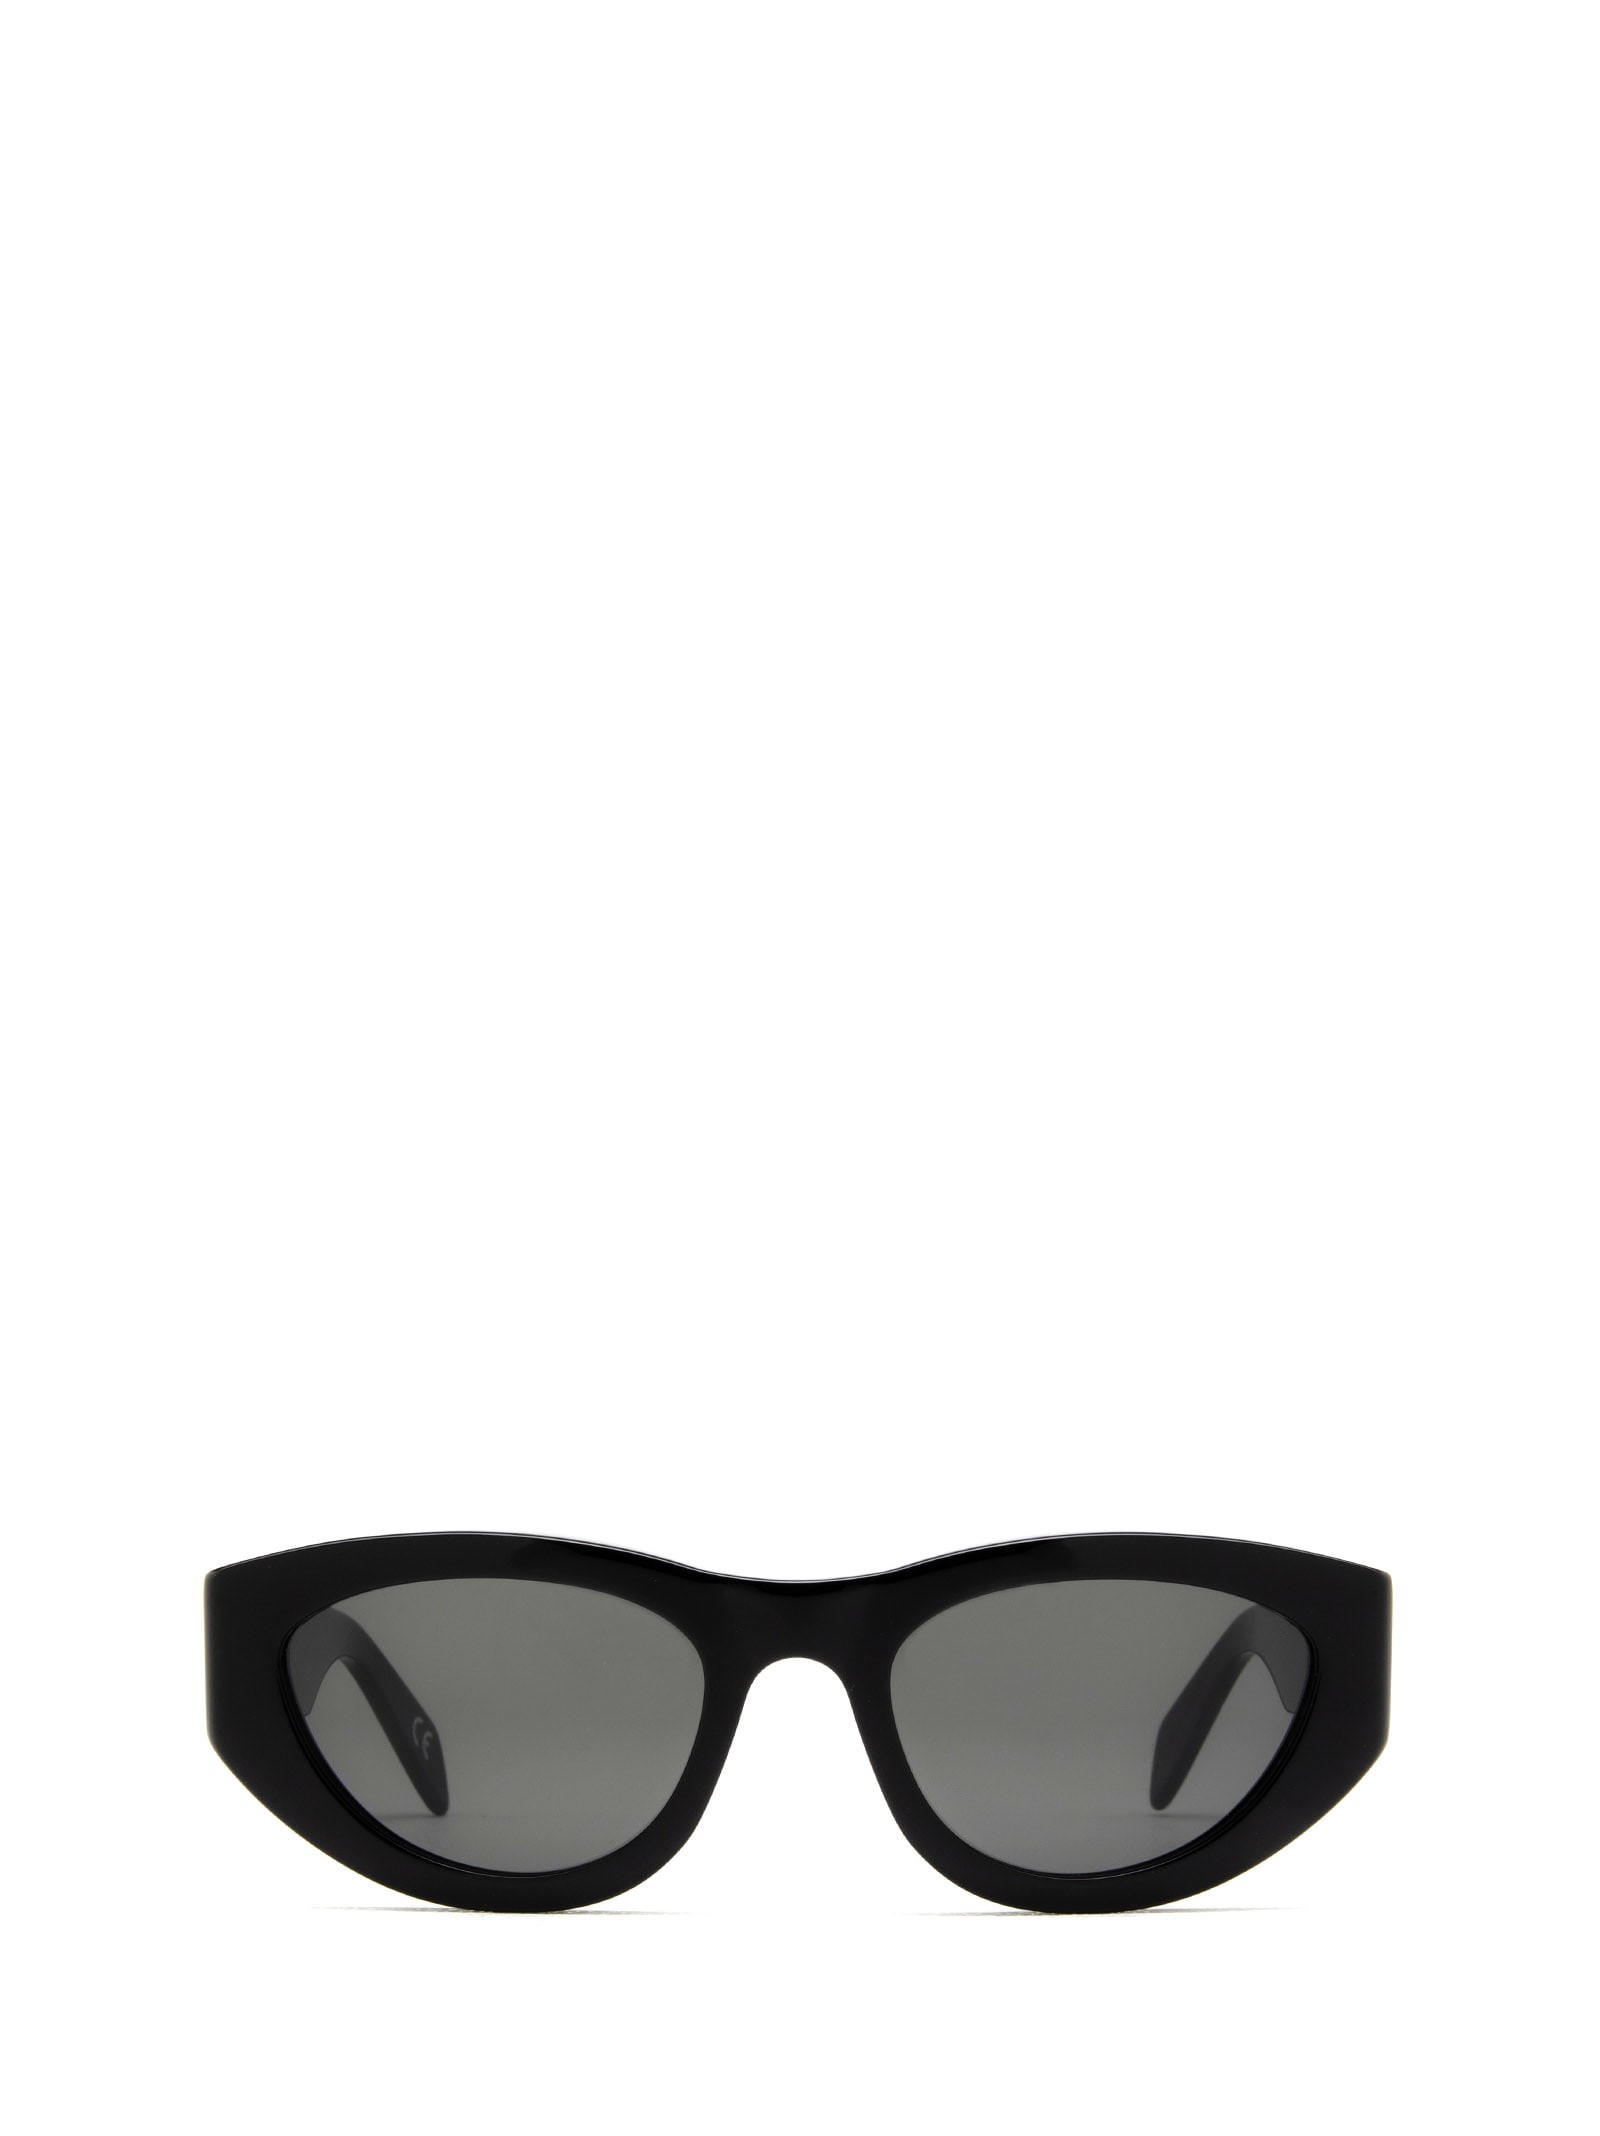 Marni Eyewear Rainbow Mountains Black Sunglasses